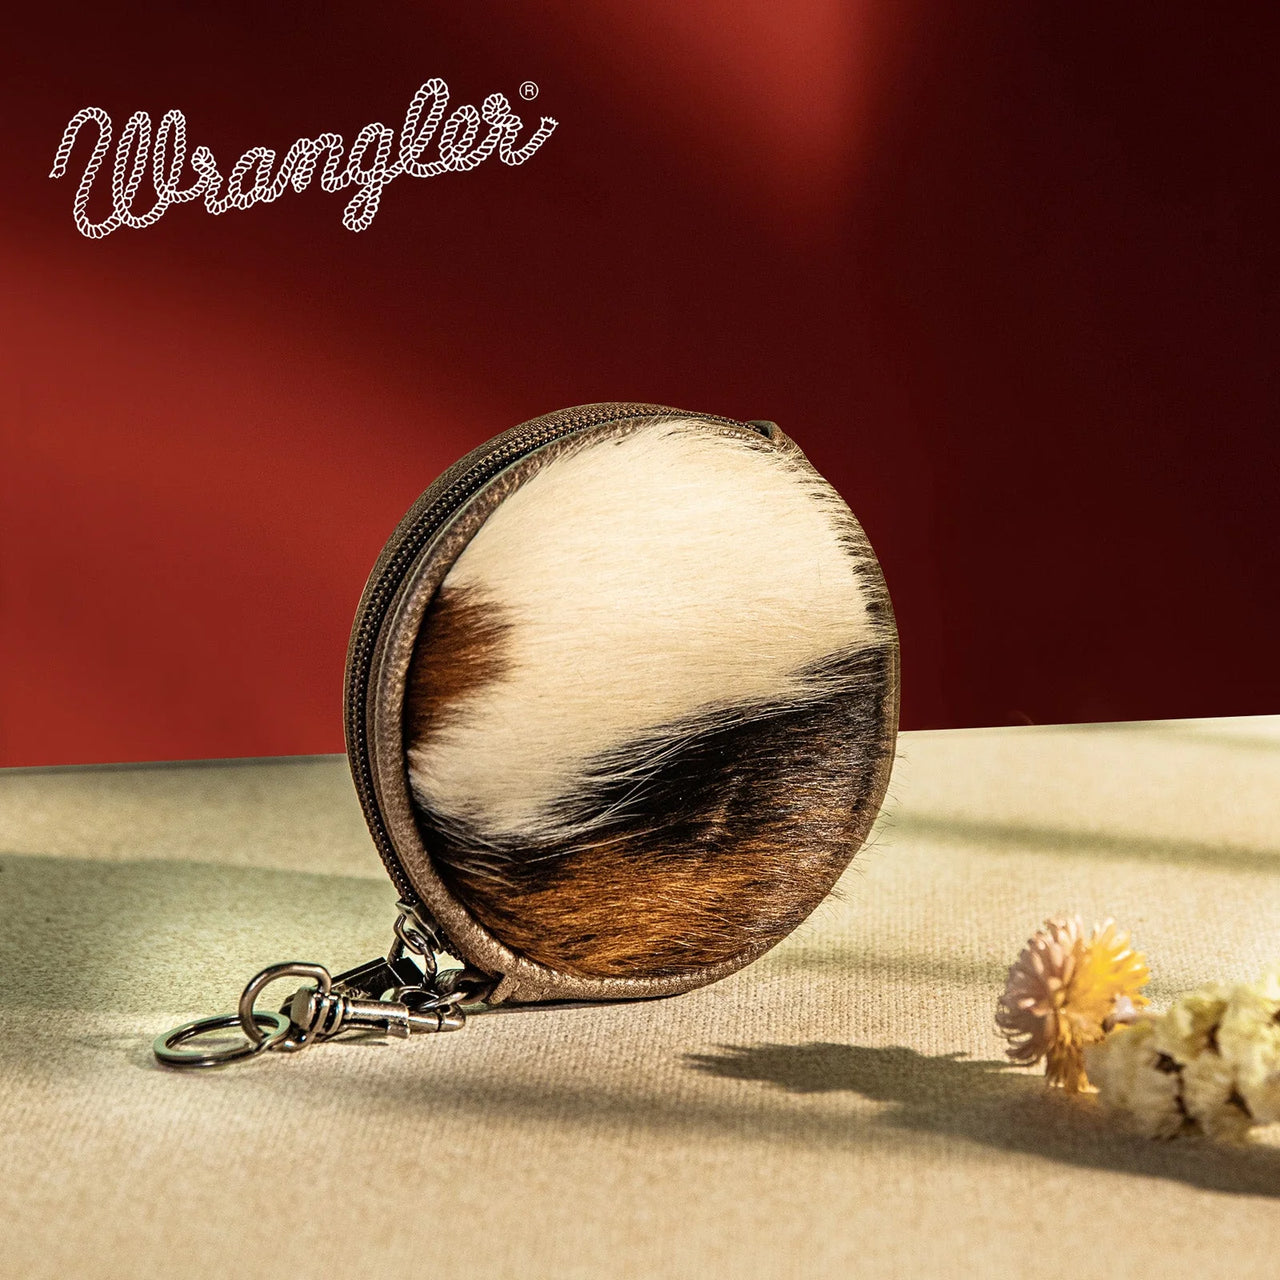 Montana West Wrangler Genuine Hair On Cowhide Circular Coin Pouch Charm - Coffee